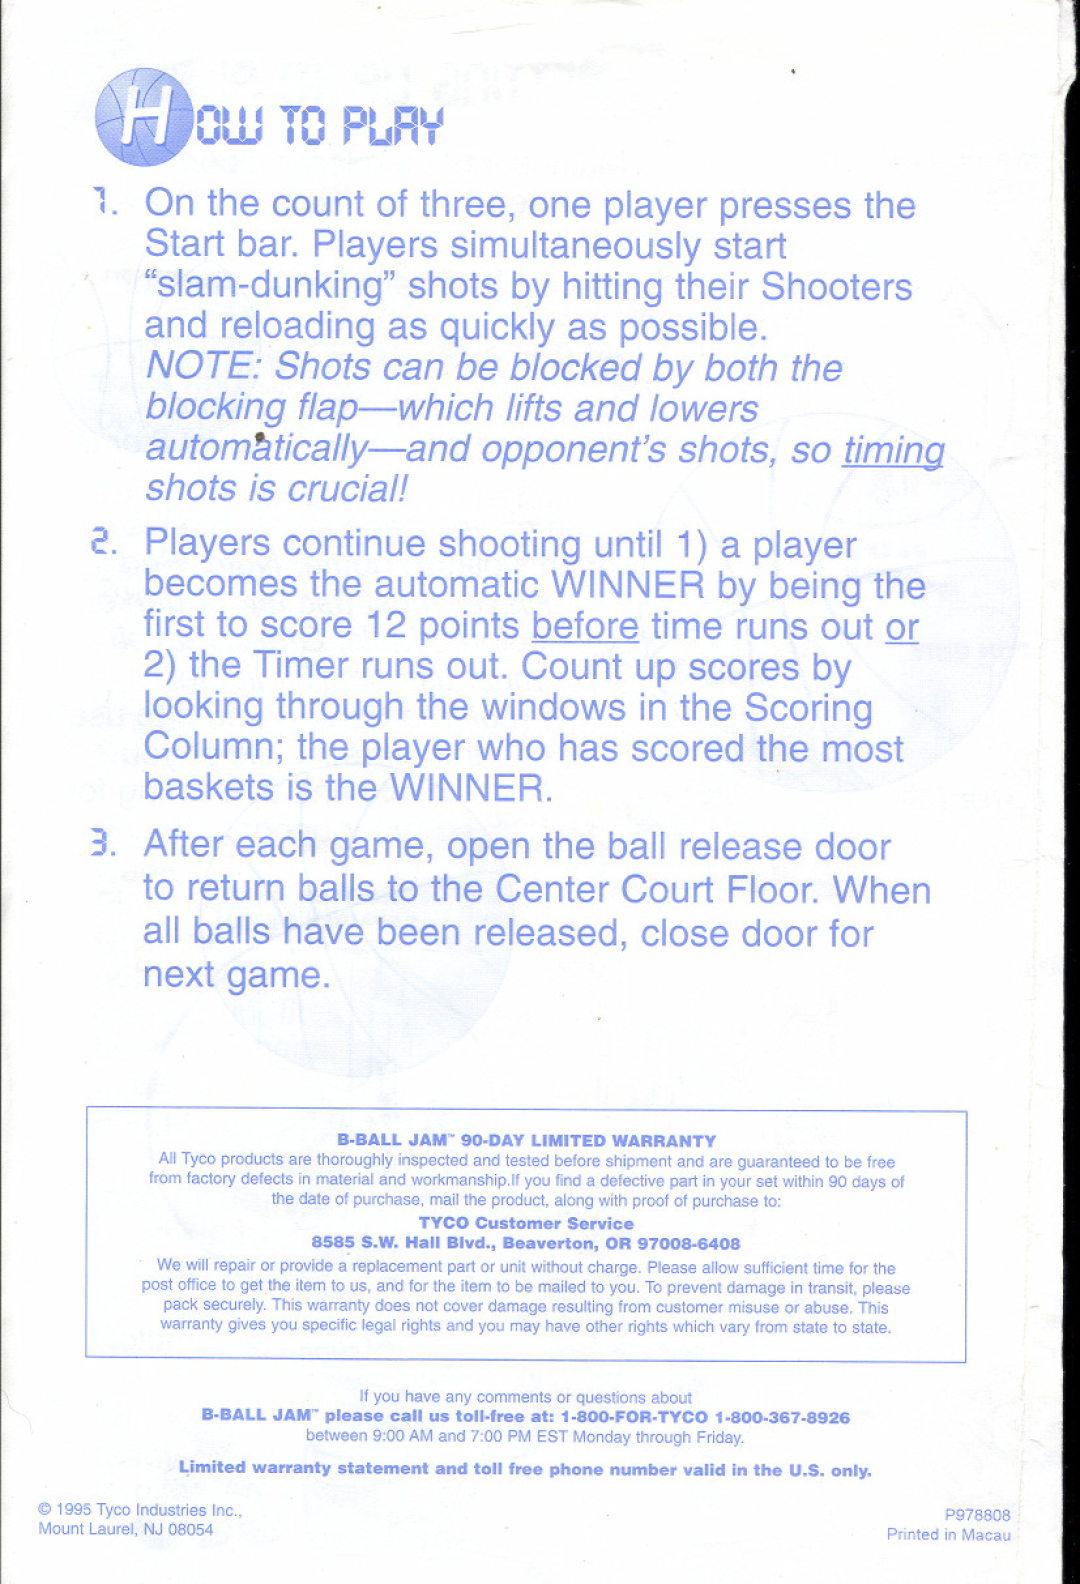 Tyco 7146 manual T.-.cau, 8U-L8- ,-u, autom~tically-and opponents shots, so timing shots is crucial, basketsis the WINNER 